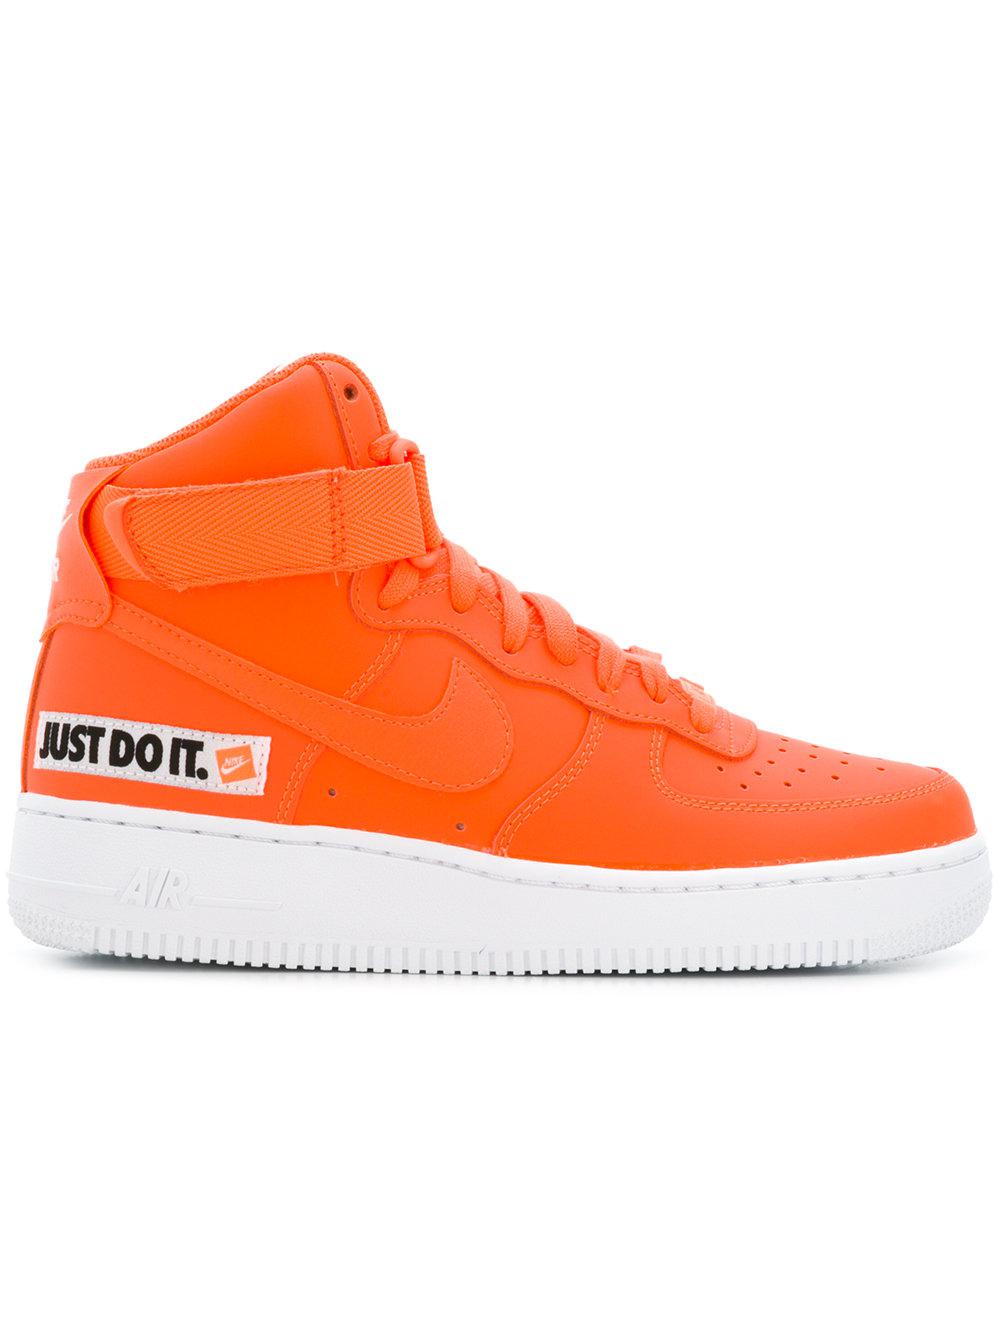 Nike Air Force 1 High Top Sneaker in Yellow & Orange (Orange) - Lyst